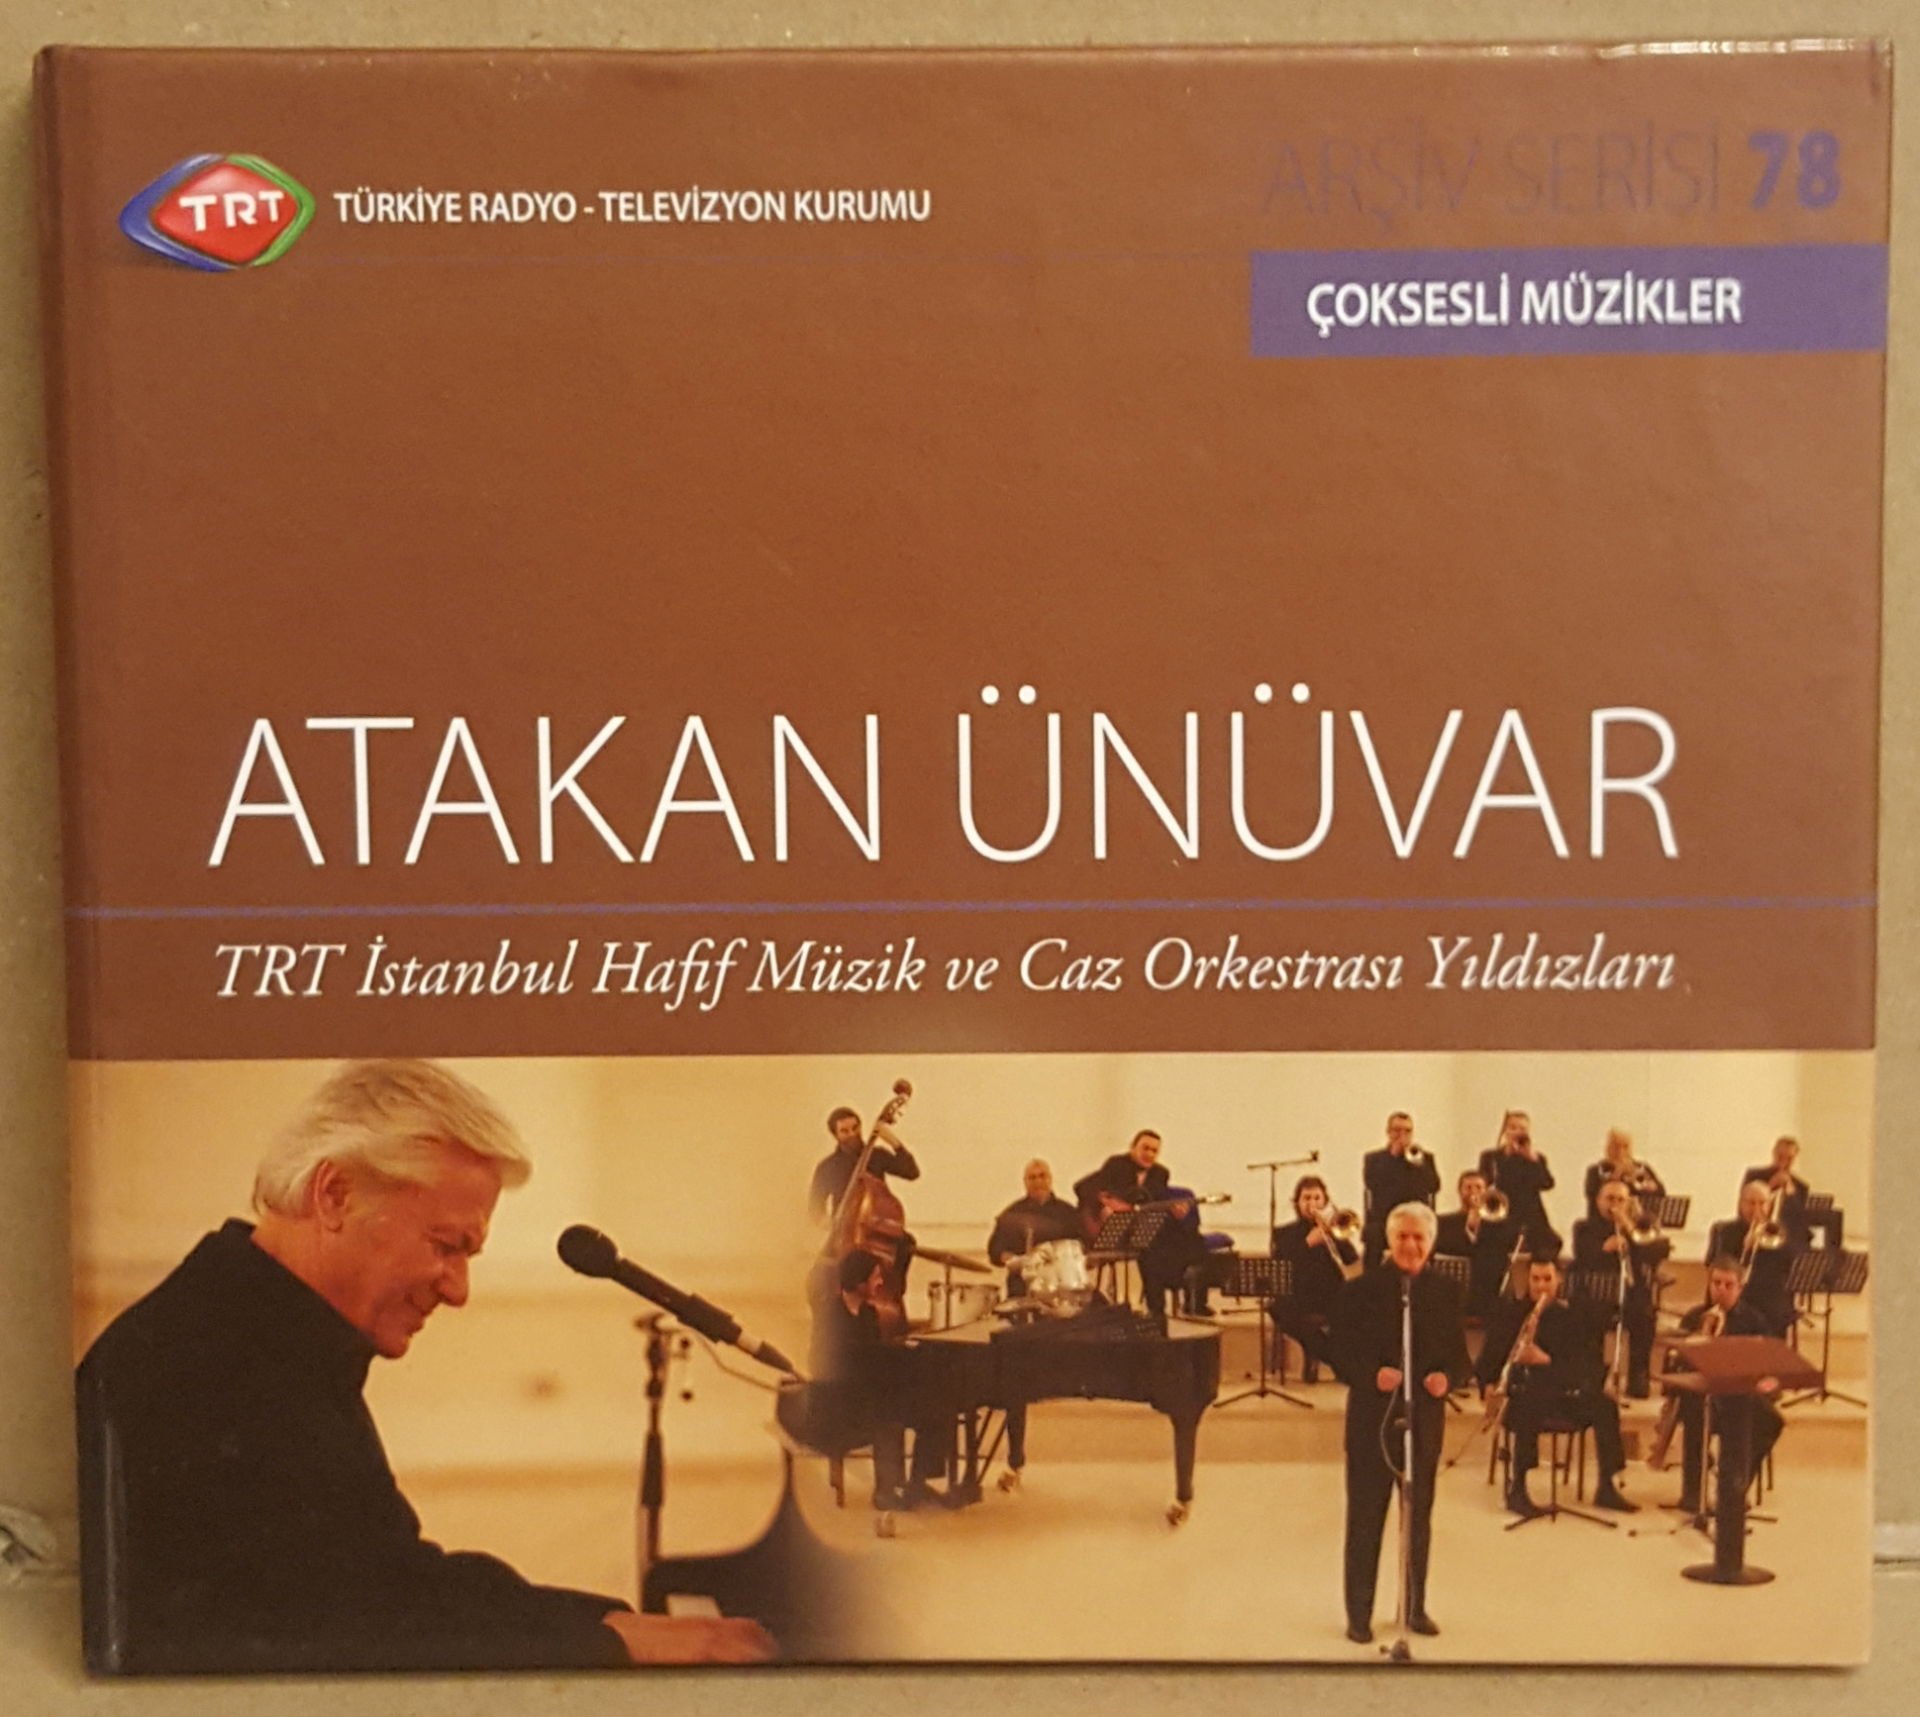 ATAKAN ÜNÜVAR - TRT ARŞİV SERİSİ 78 / ÇOK SESLİ MÜZİKLER - CD 2.EL